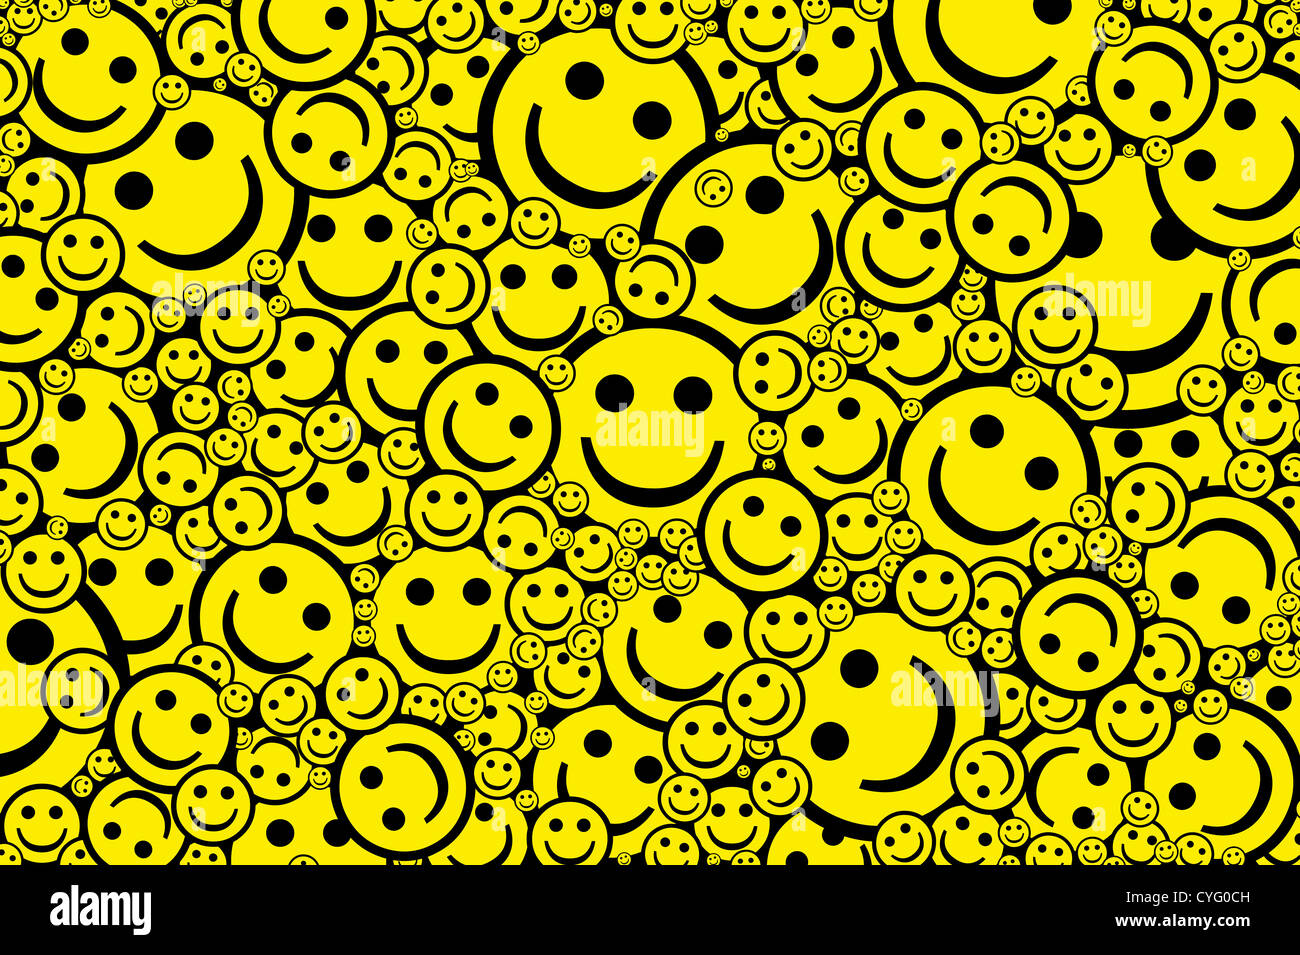 Happy smiley faces illustration Stock Photo